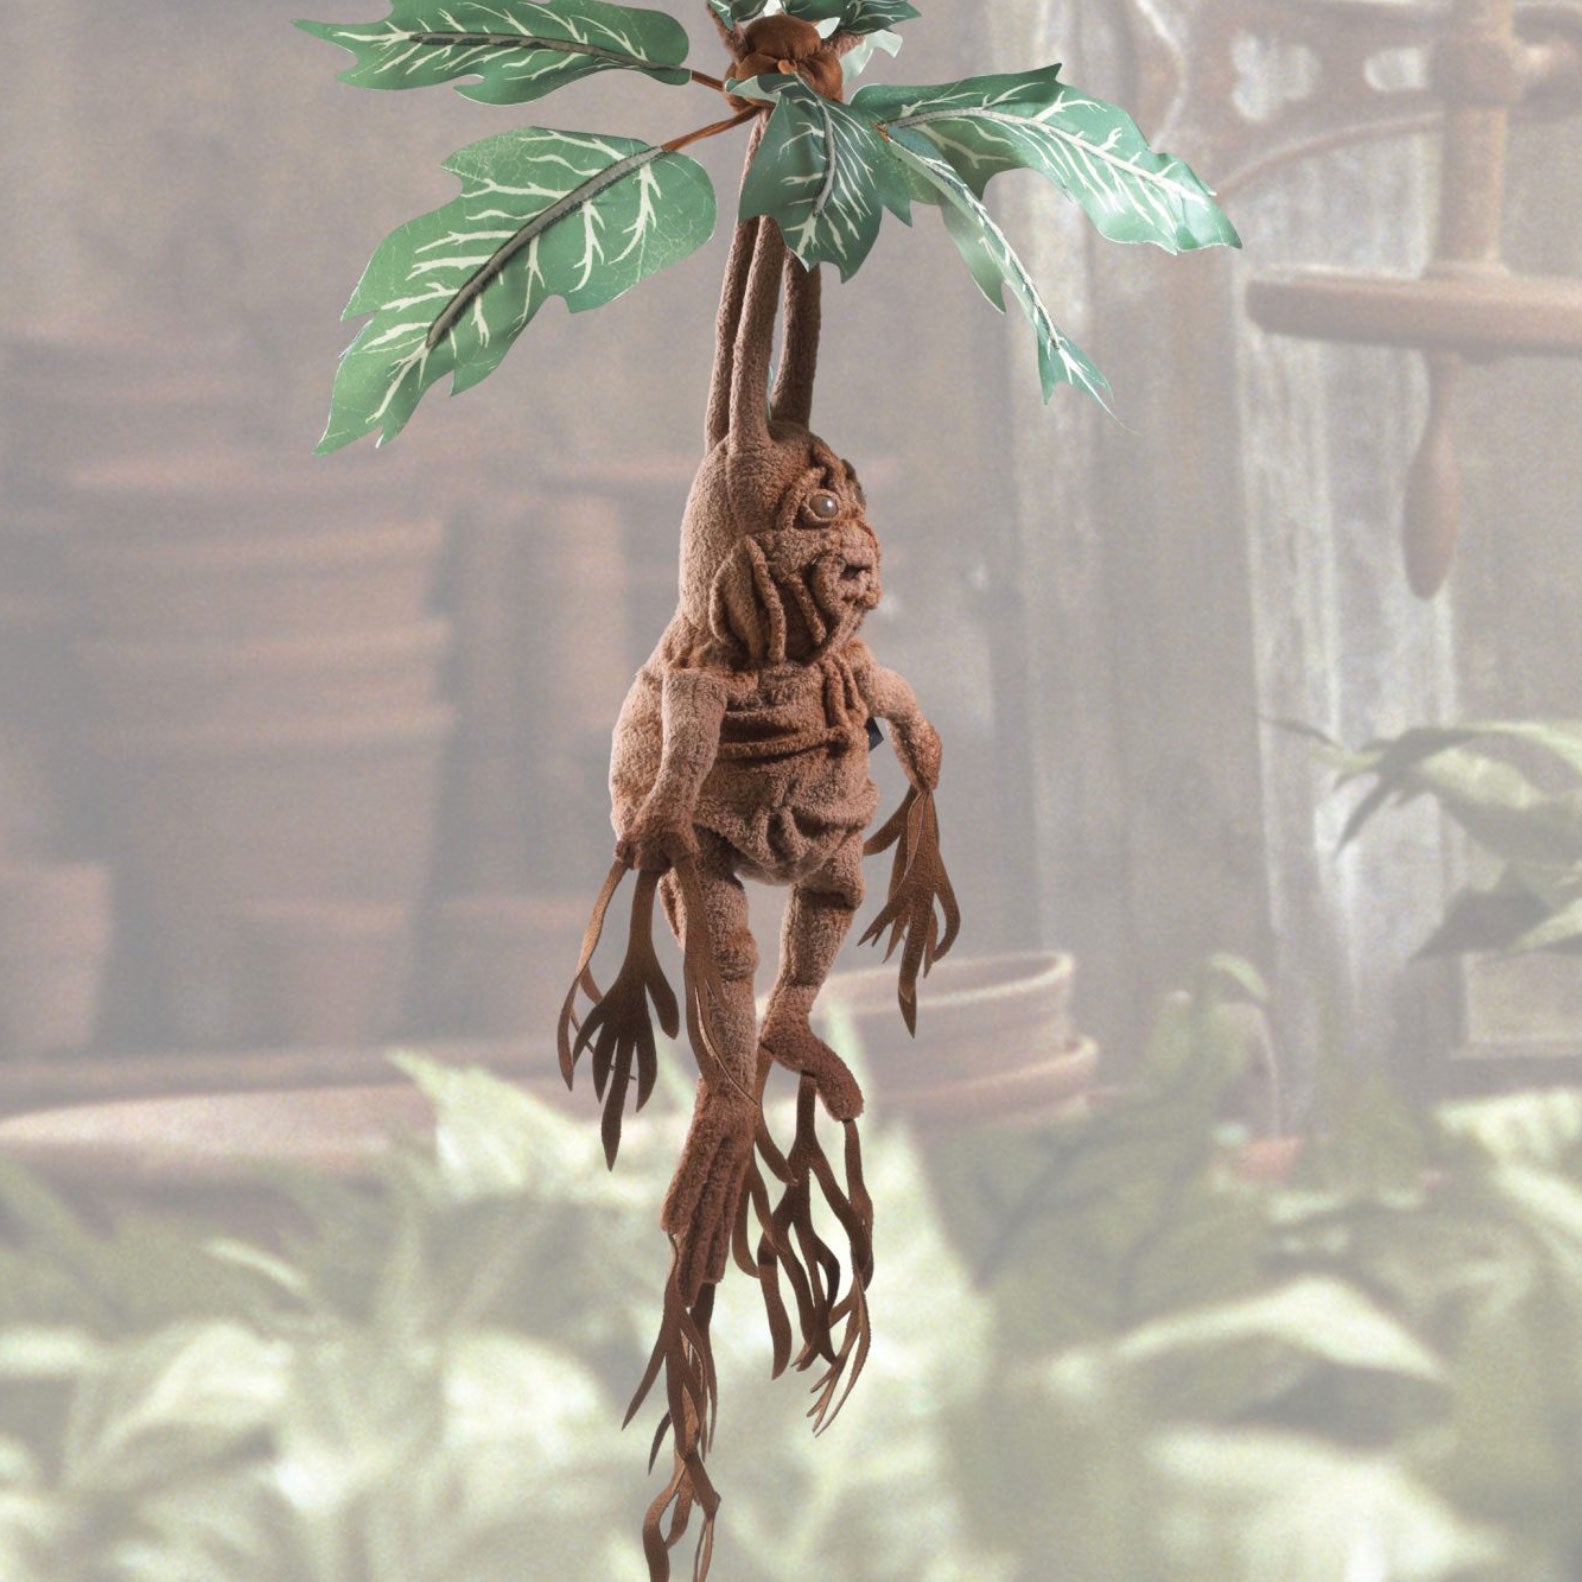 Interactive Mandrake Collector Plush